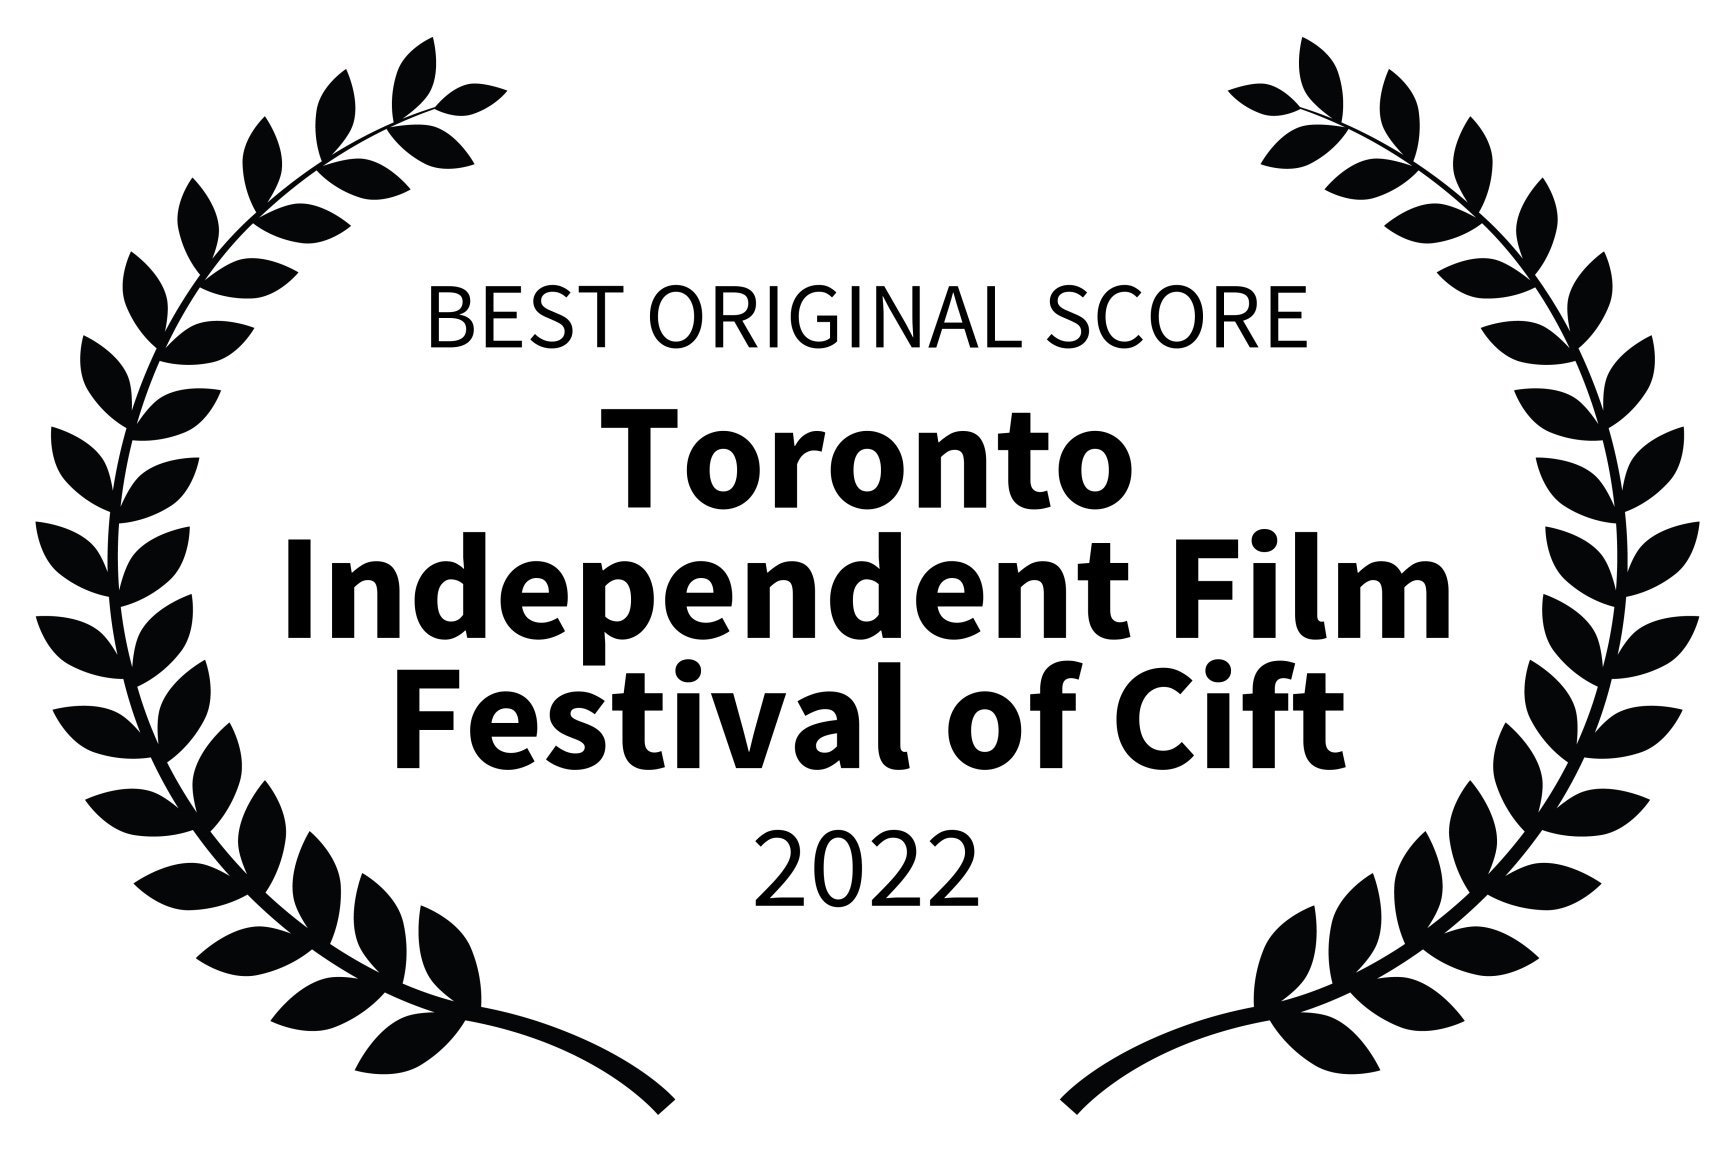 BEST ORIGINAL SCORE - Toronto Independent Film Festival of Cift - 2022.jpg